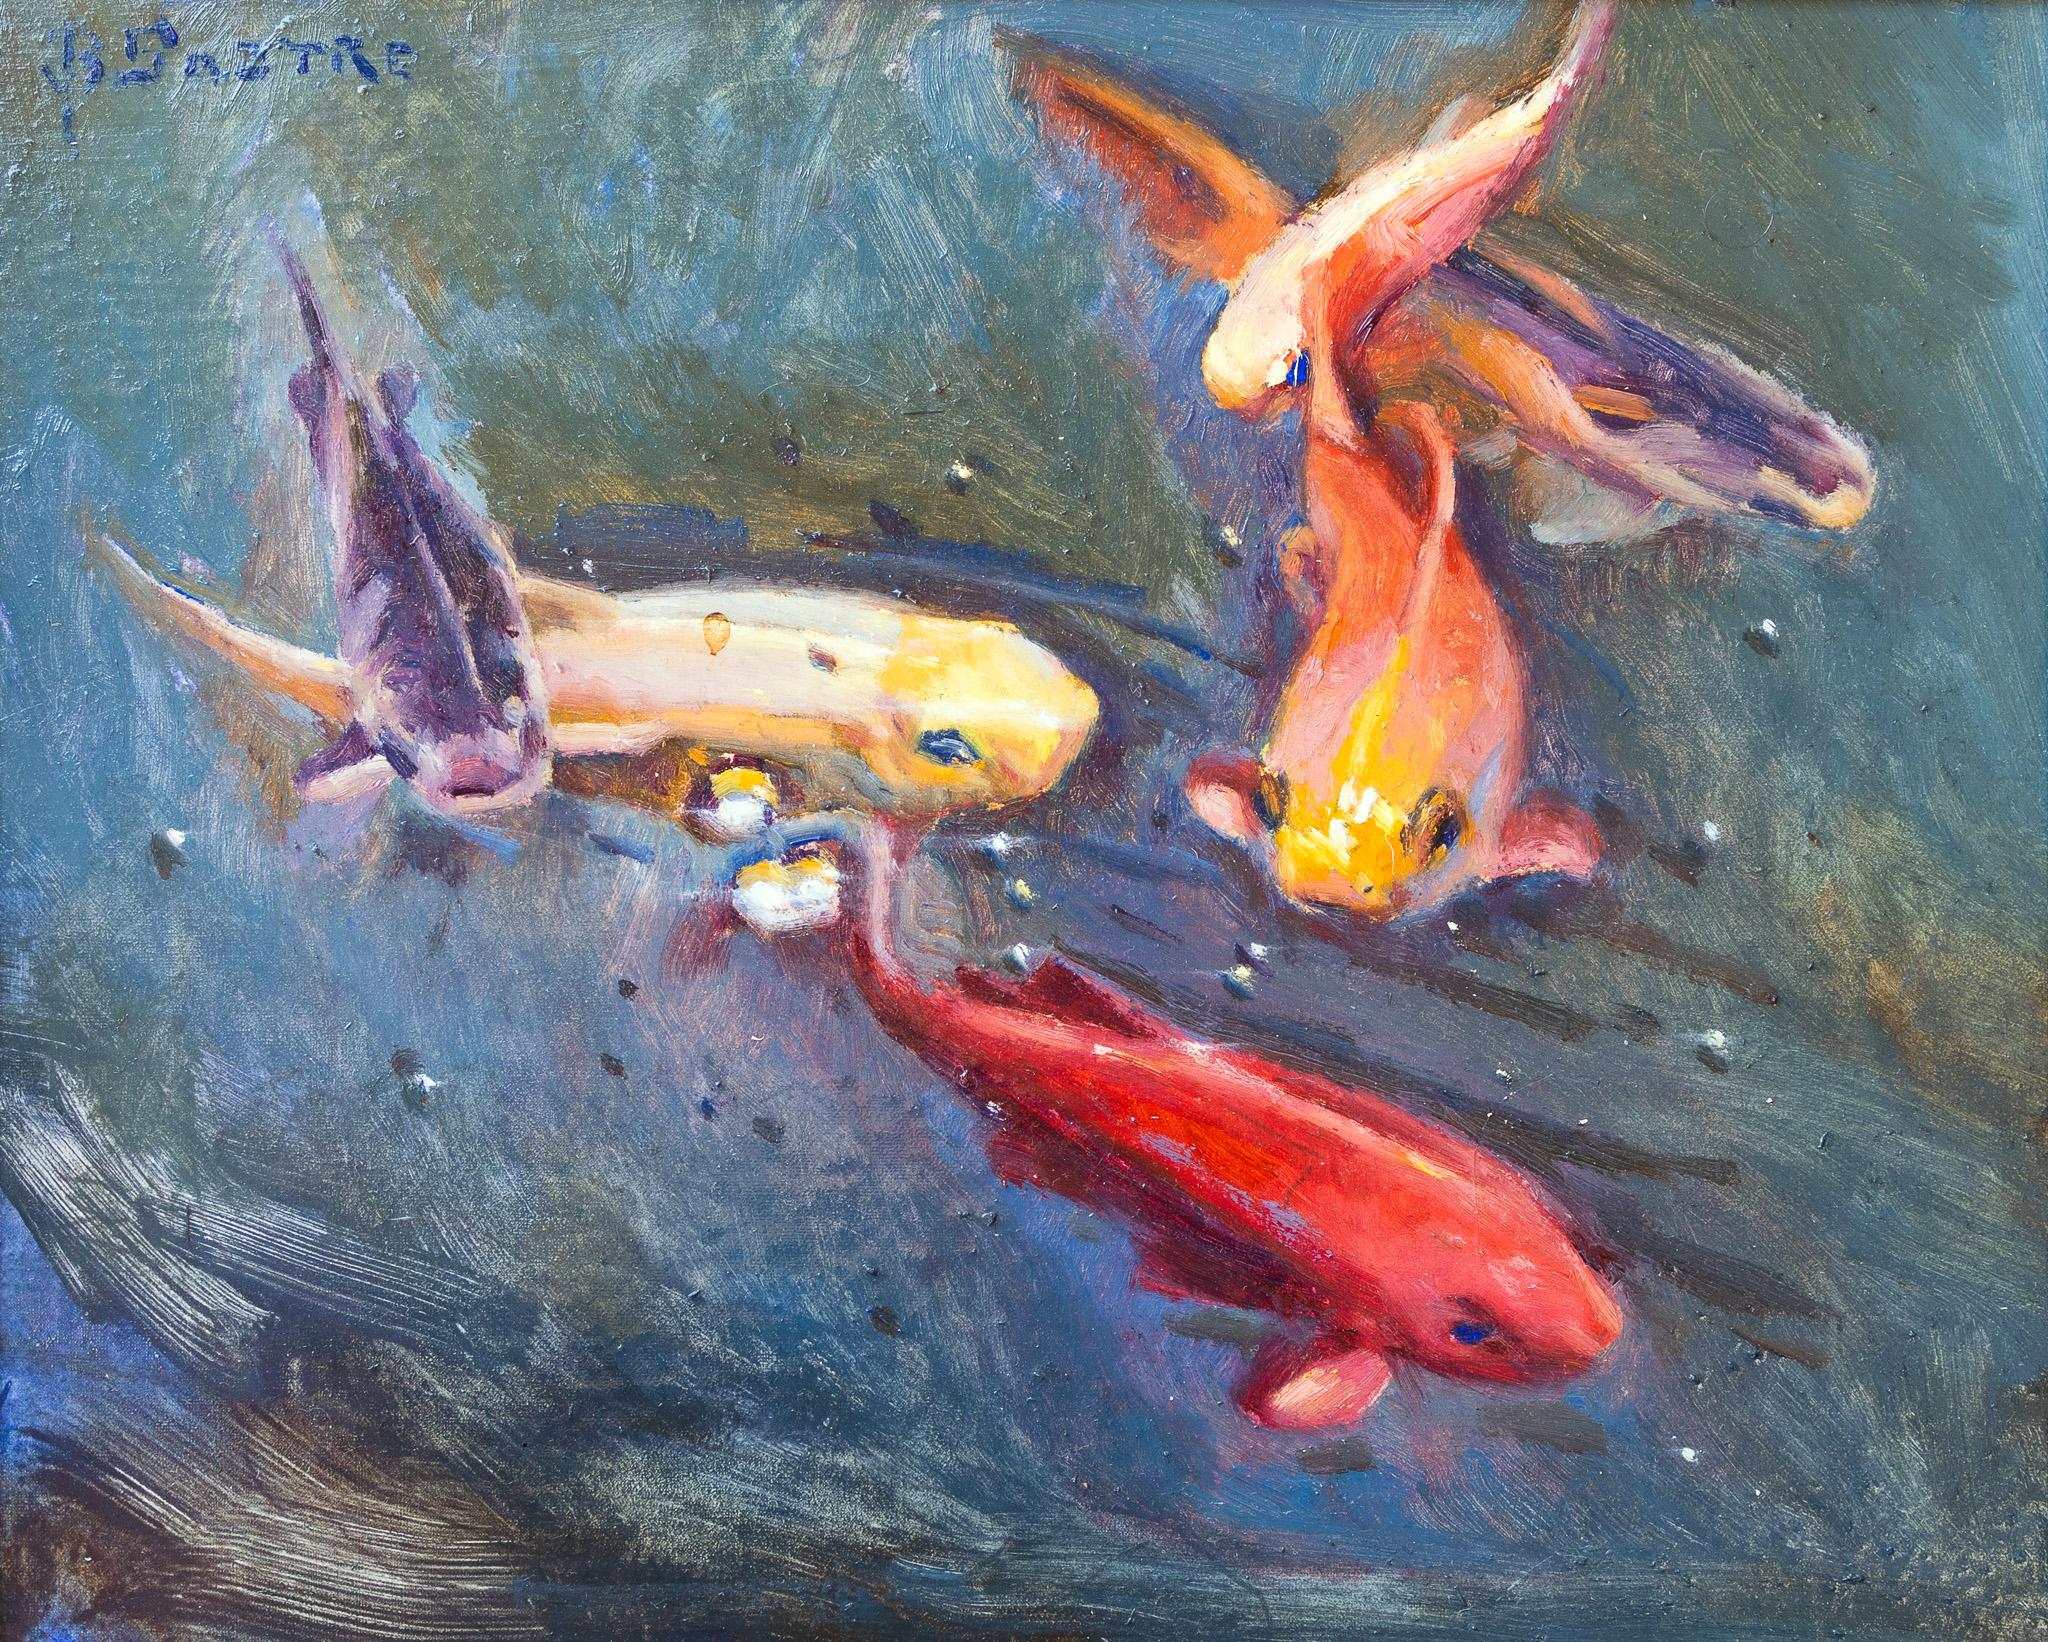 Bartolome Sastre Animal Painting - "Koi Fish" Impressionist Painting of a Koi Pond